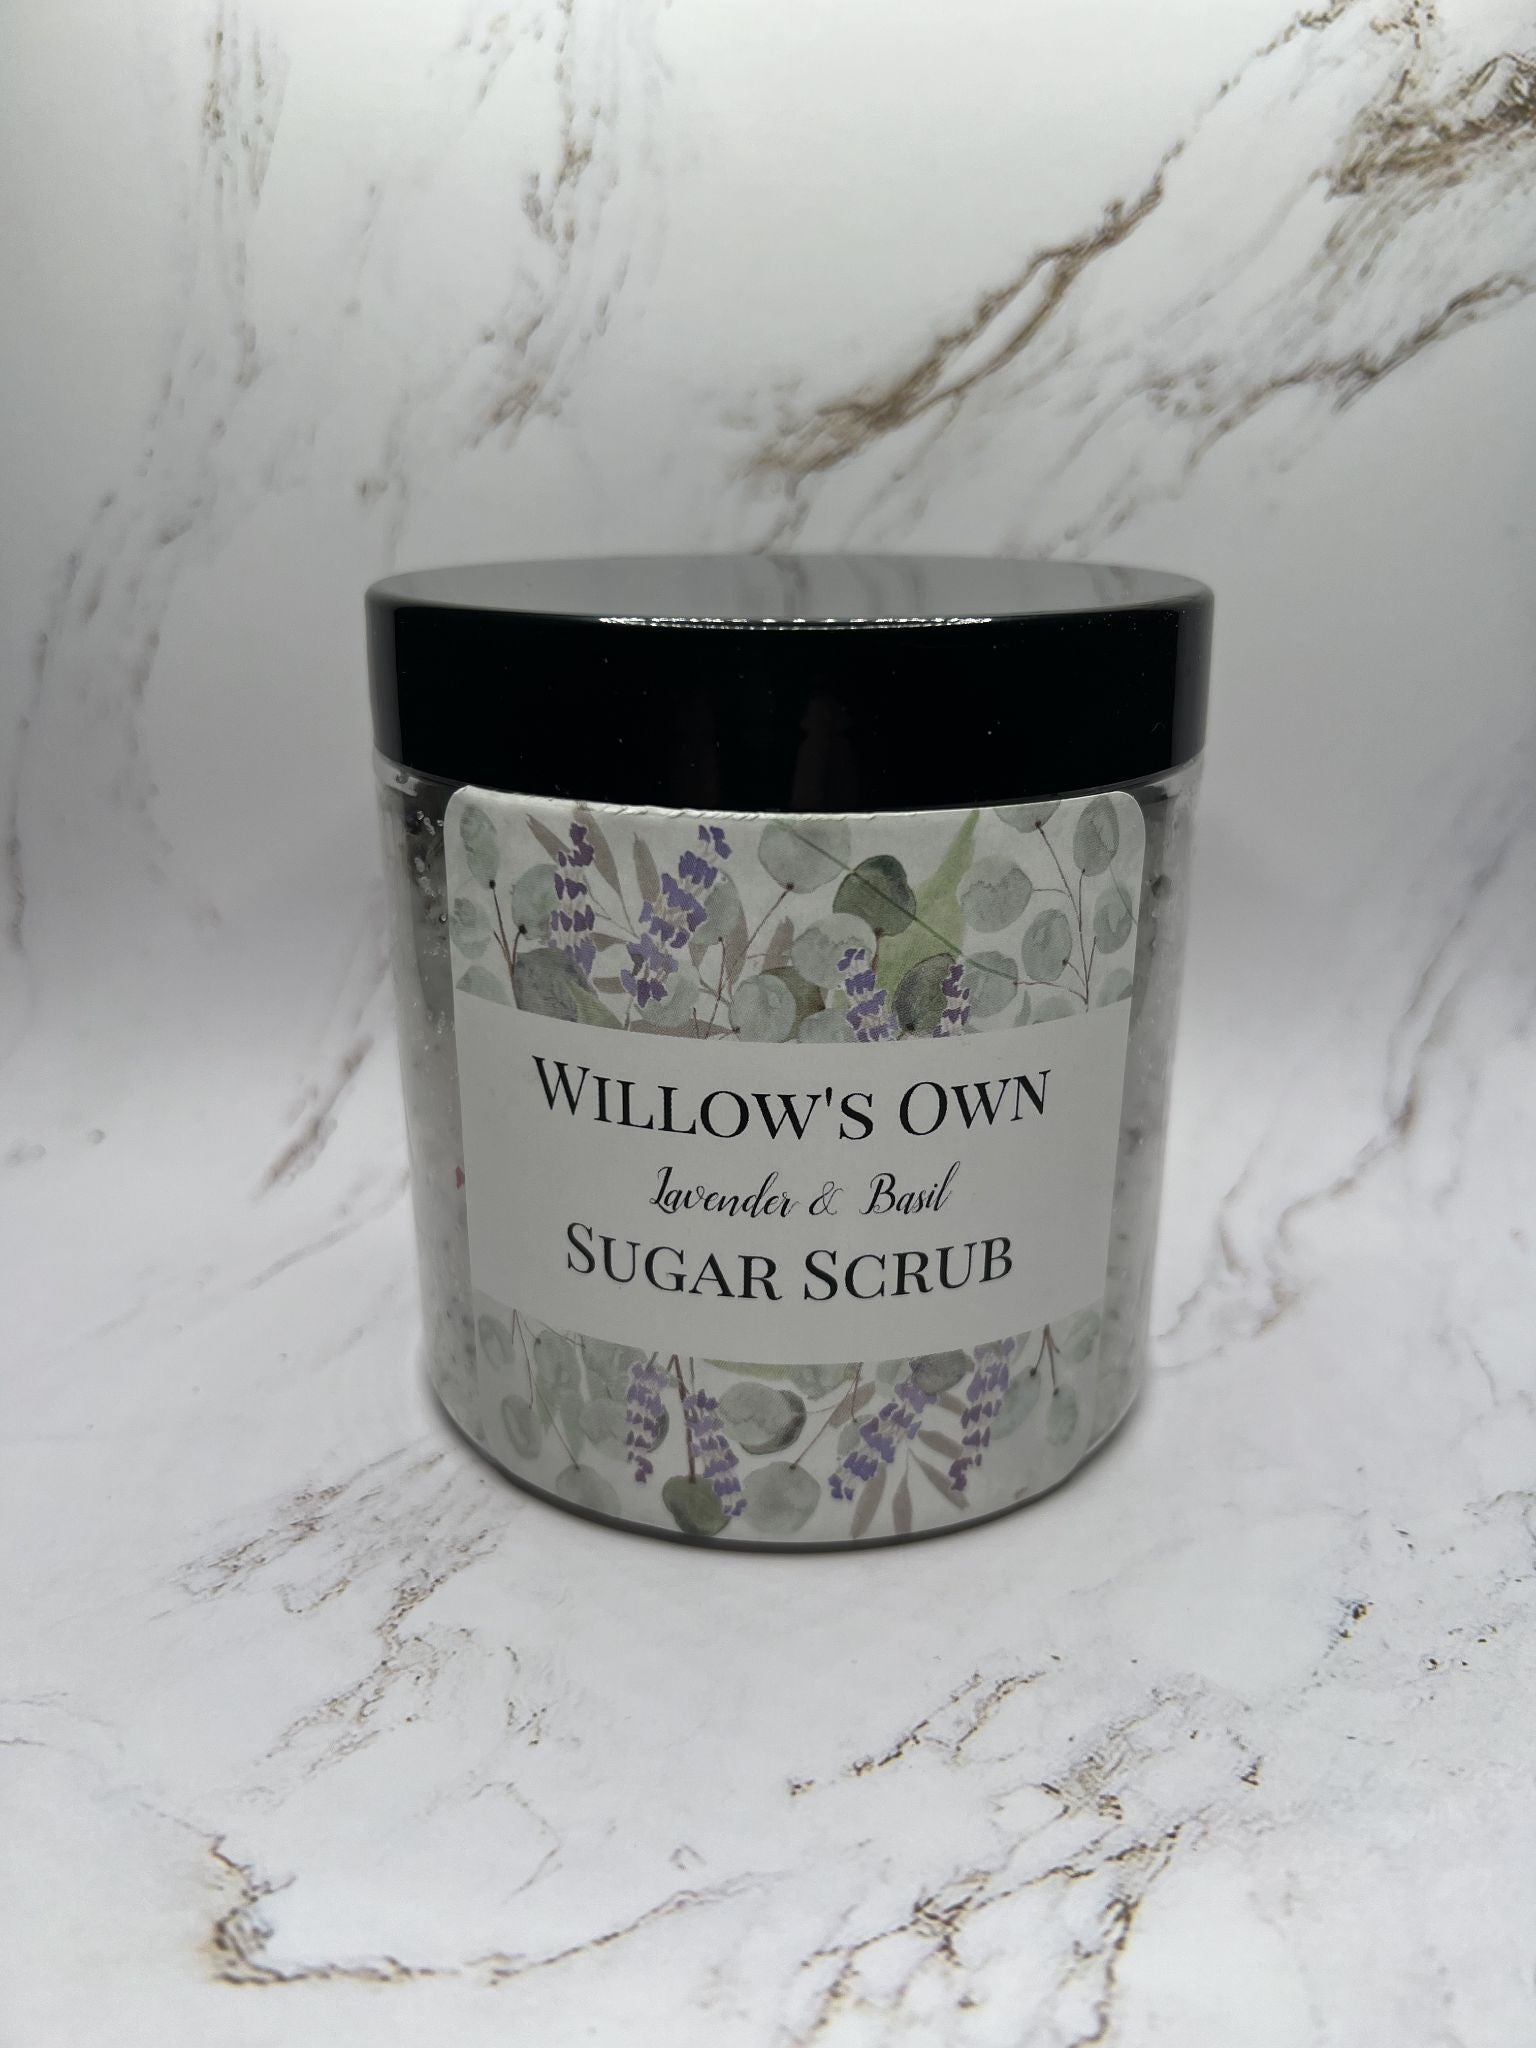 066-017 - Willow's Own Sugar Scrub - 1